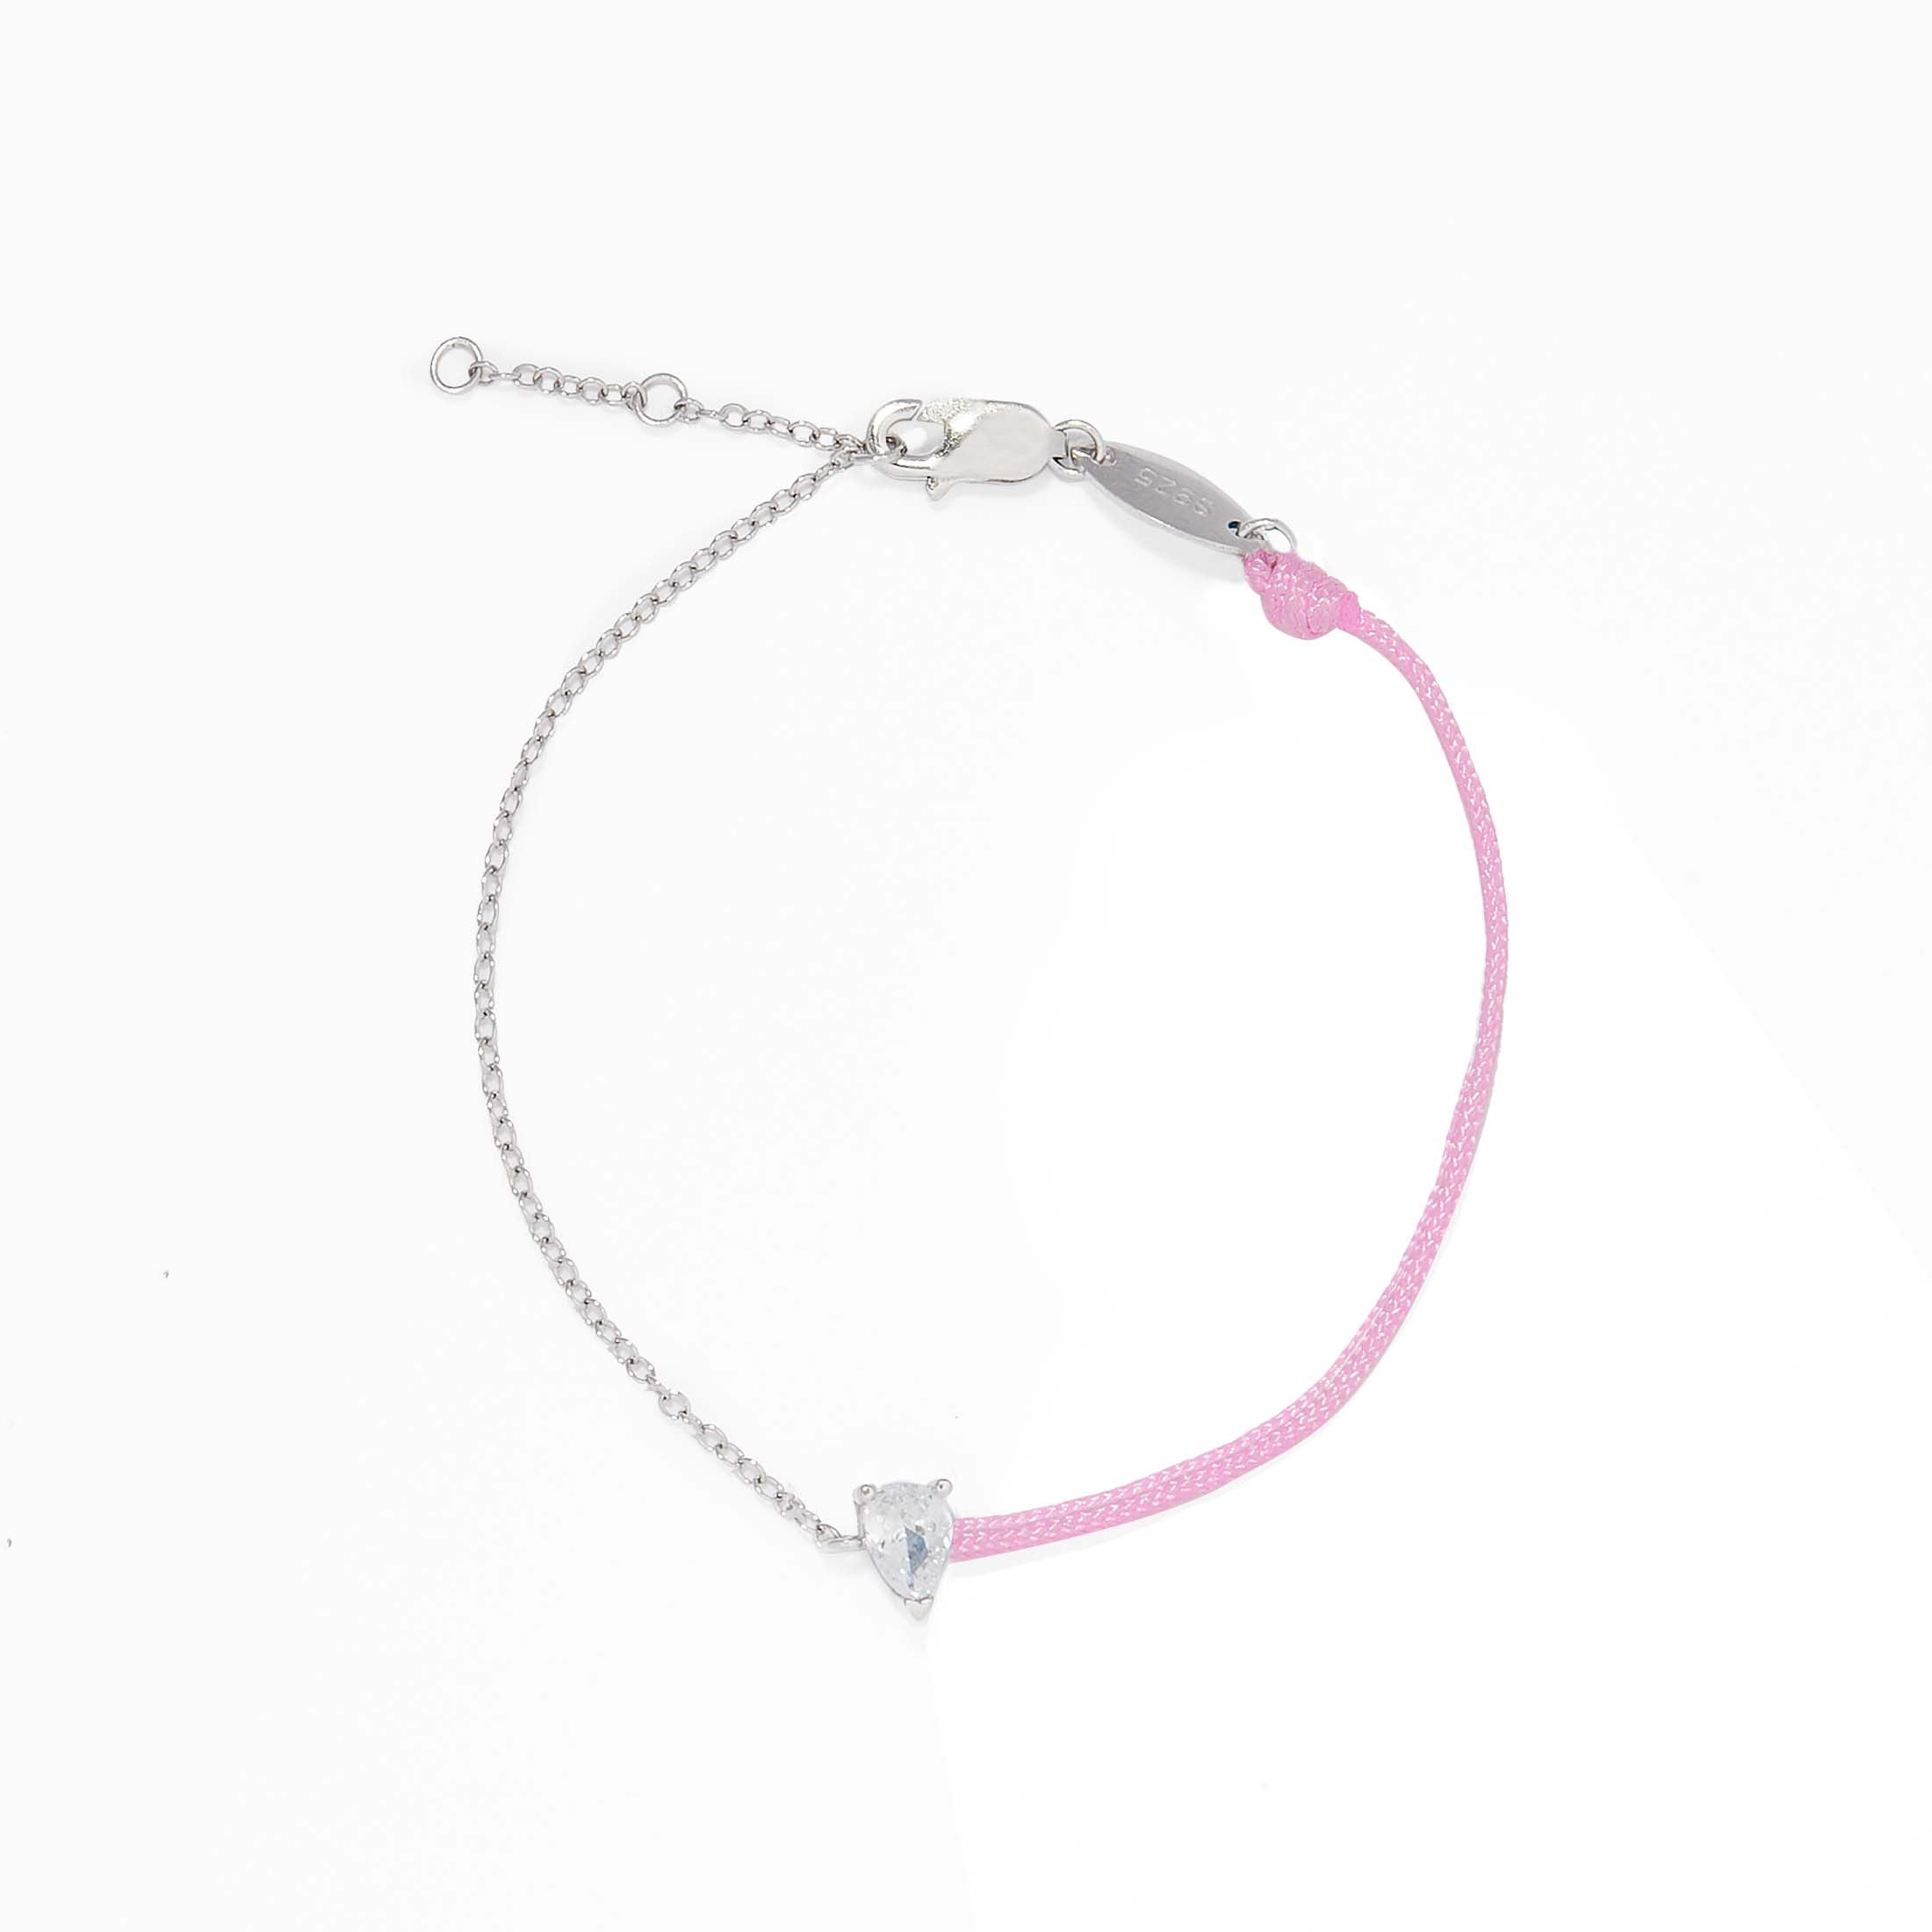 String Chain Bracelet, Adjustable Chain Bracelet, La Maya